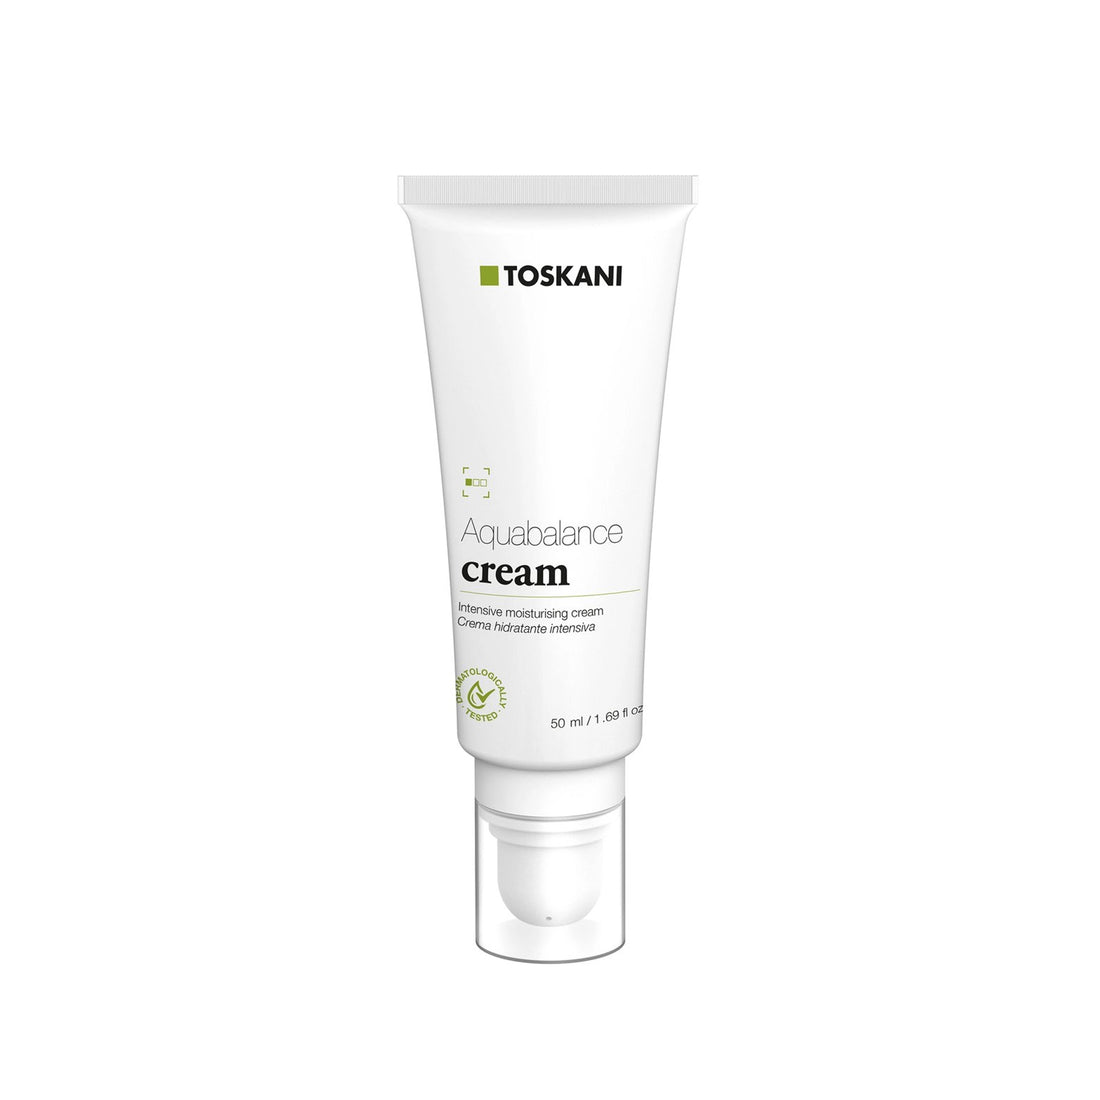 Toskani - Aquabalance cream